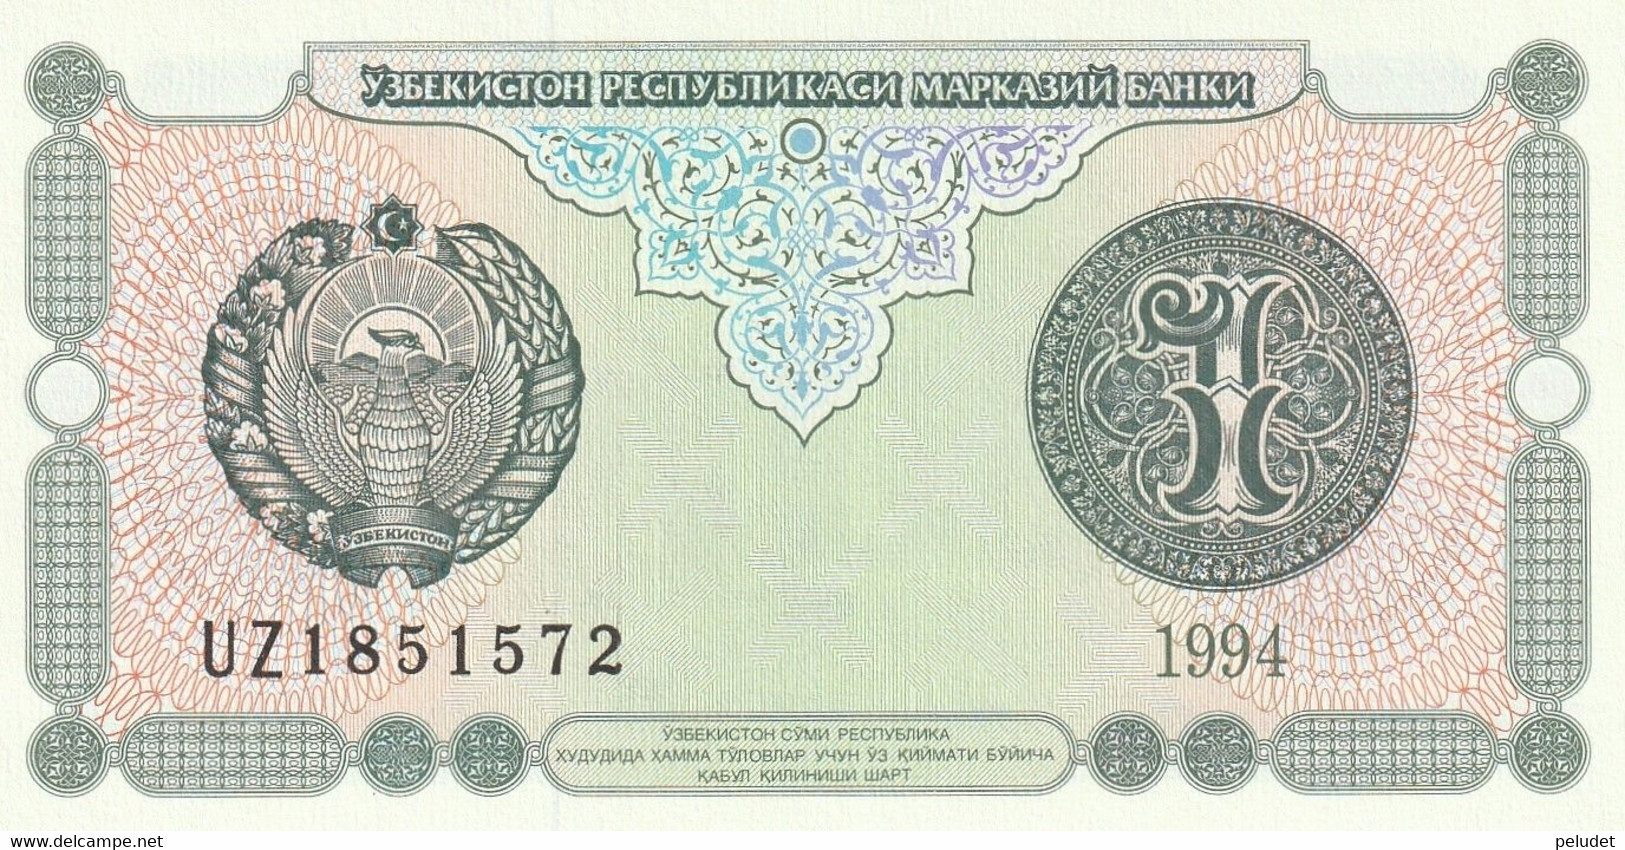 Uzbekistan 1 Sum Banknote, 1994, P-73 - Uzbekistan